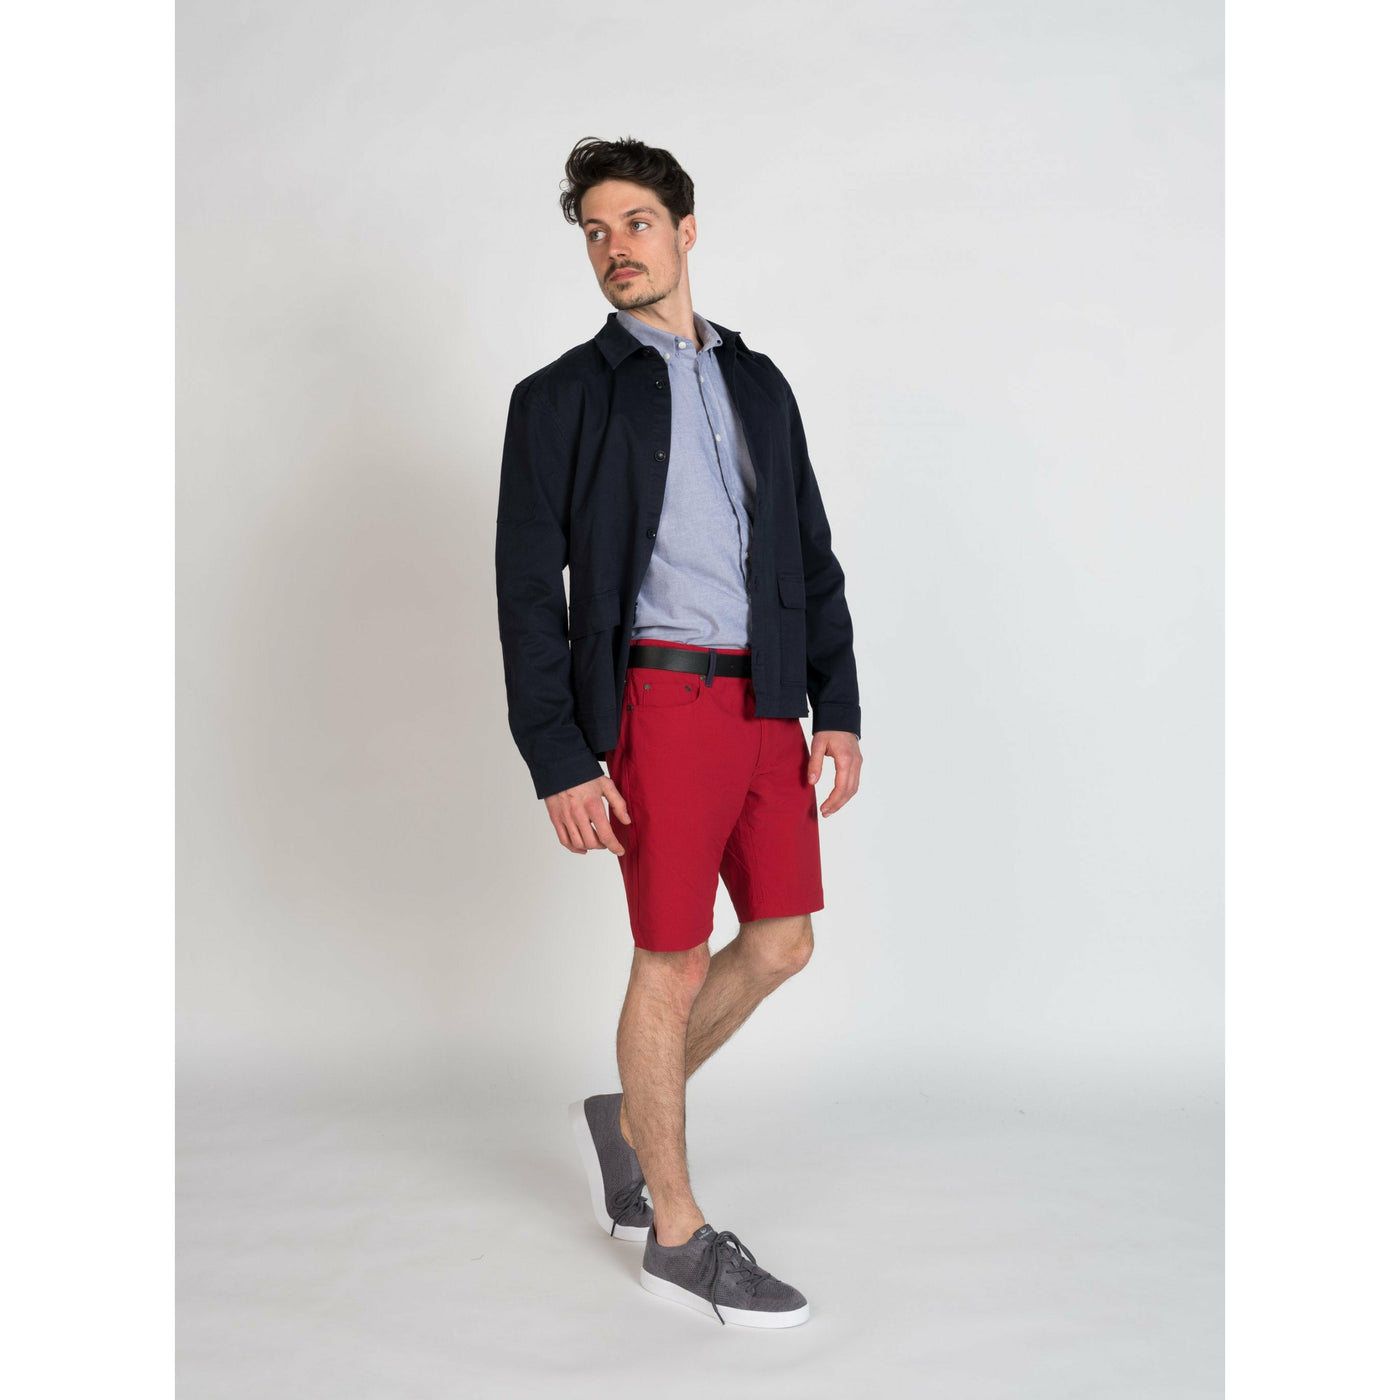 BREDDY'S - shorts New York Basic #farbe_red